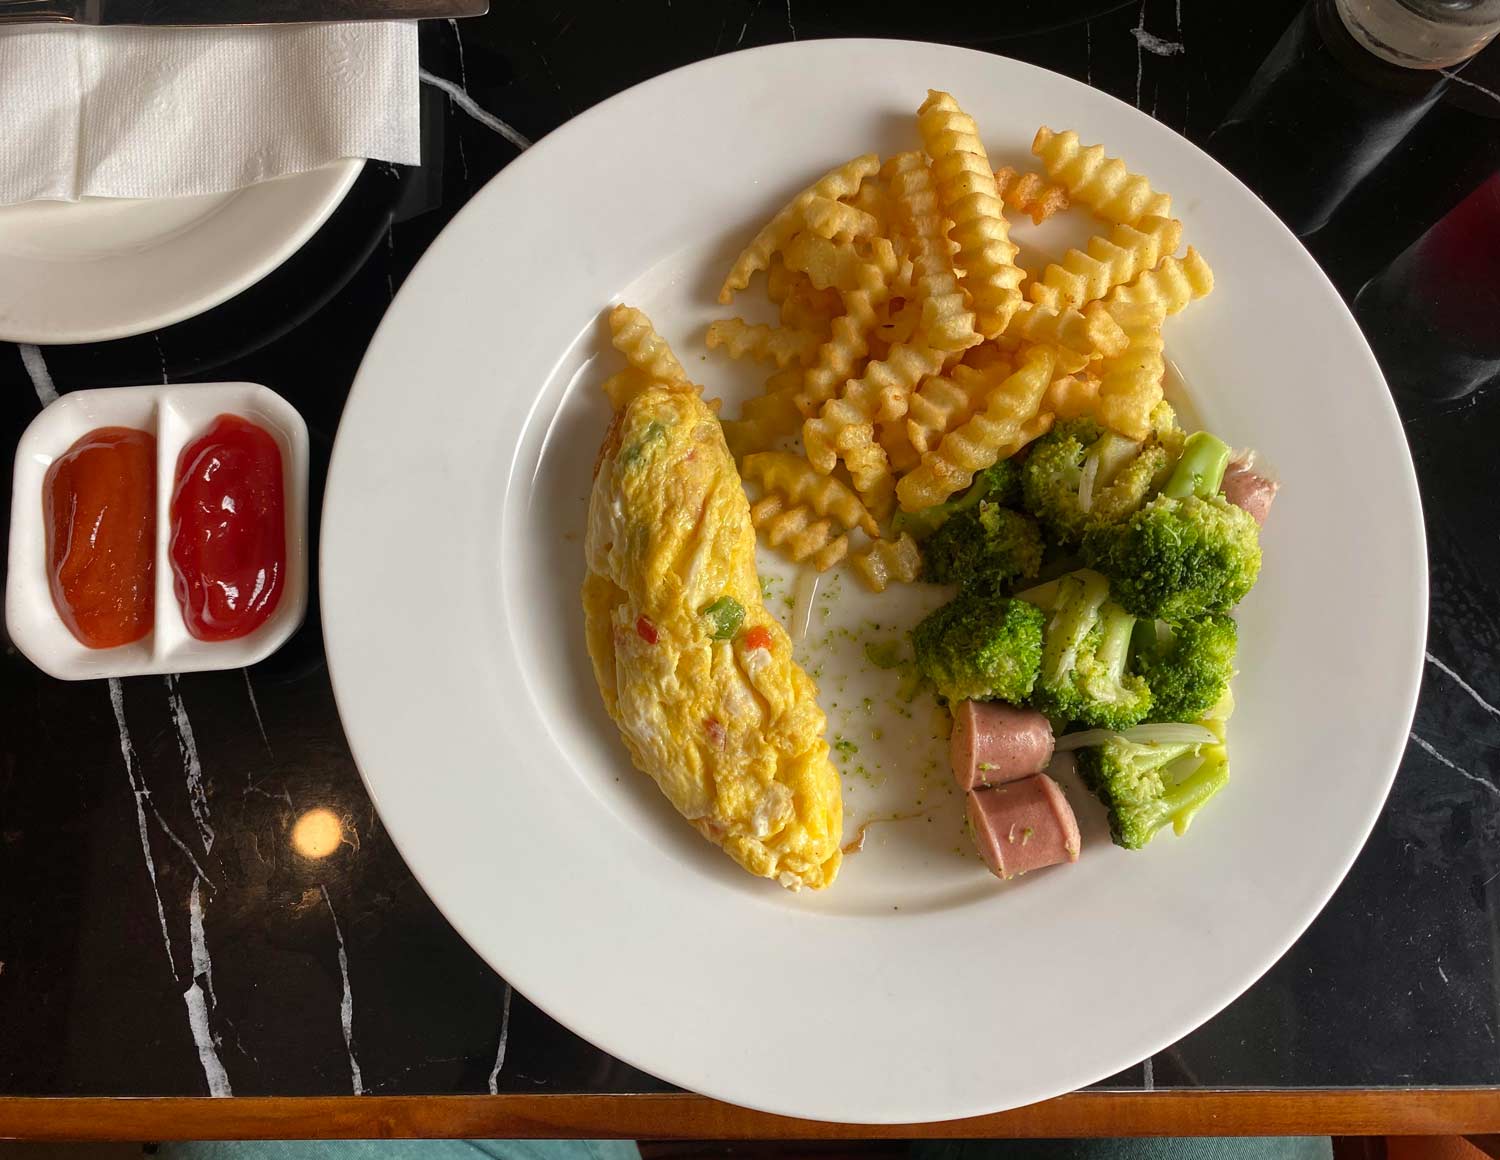 “American Breakfast”, according to a hotel in Sumatra